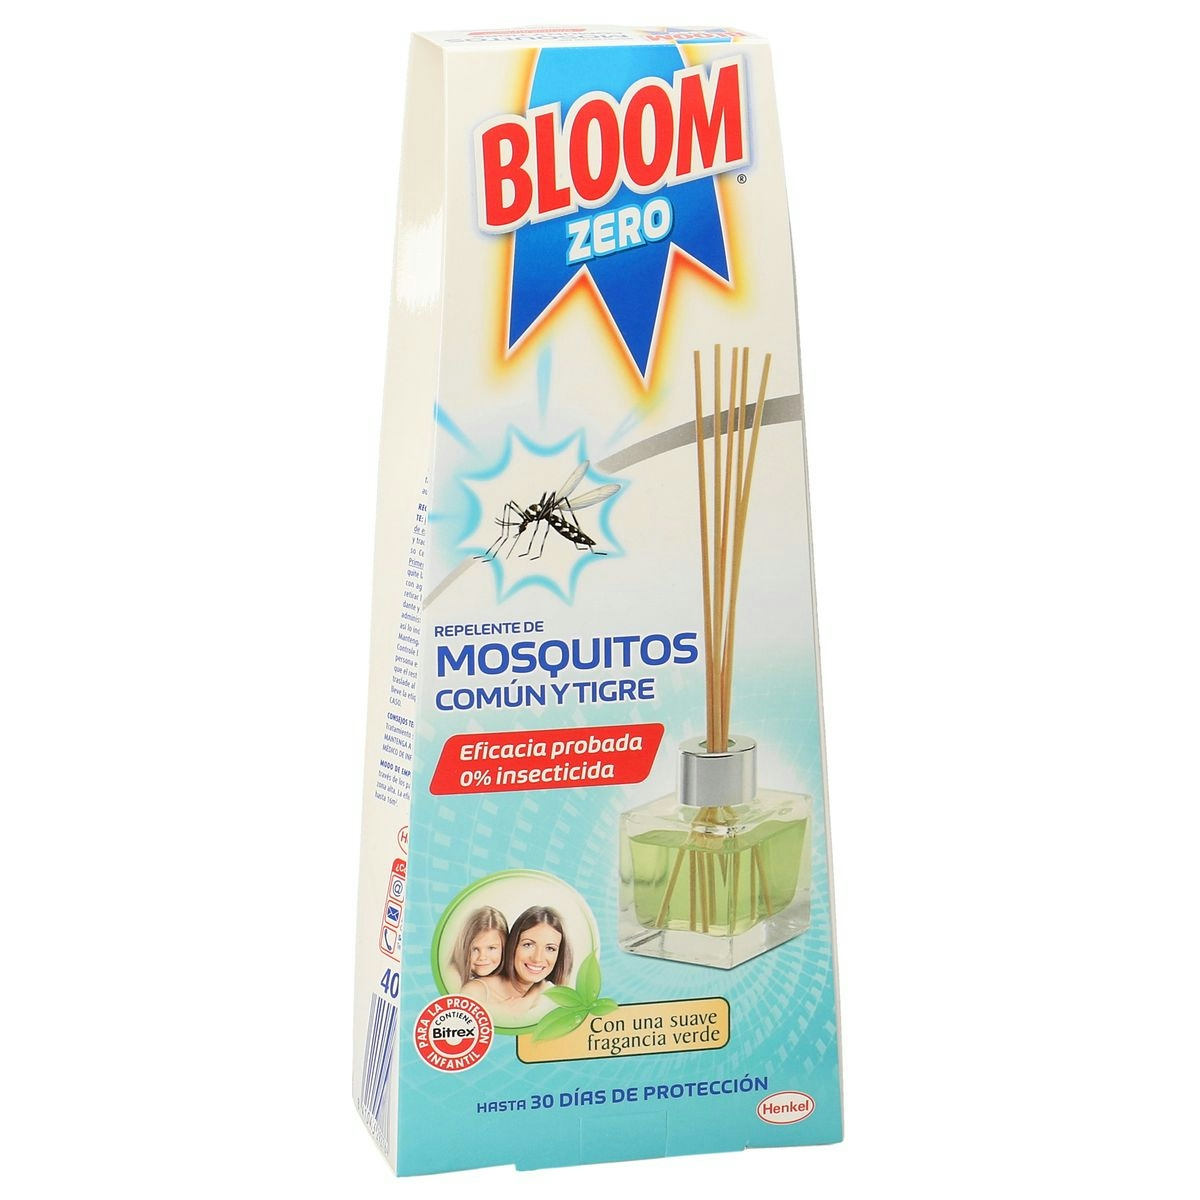 Repelente antimosquitos BLOOM Zero mikado spray 40 ml